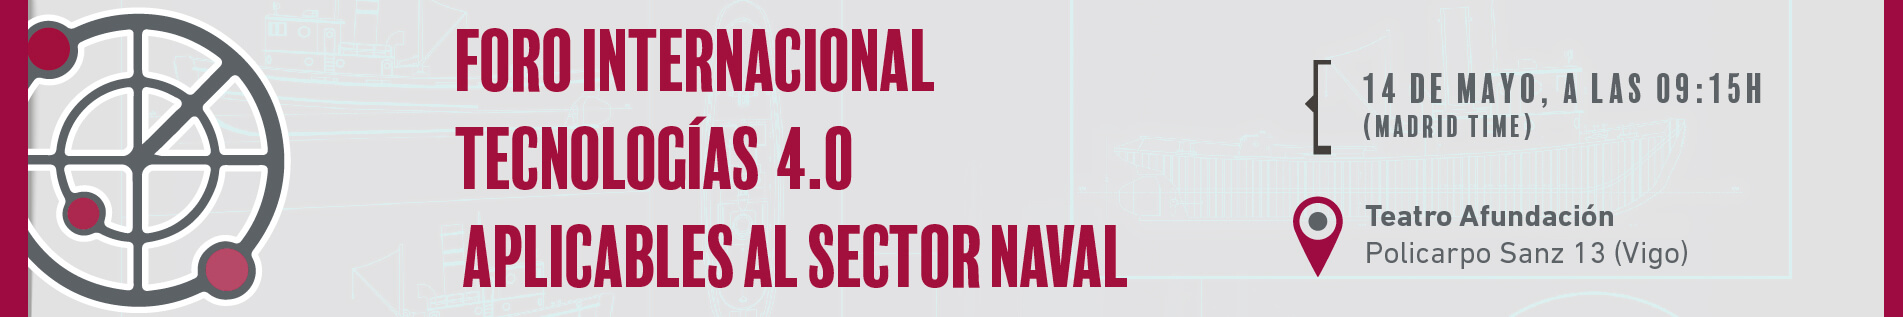 FORO INTERNACIONAL TECNOLOGÍAS 4.0 APLICABLES AL SECTOR NAVAL